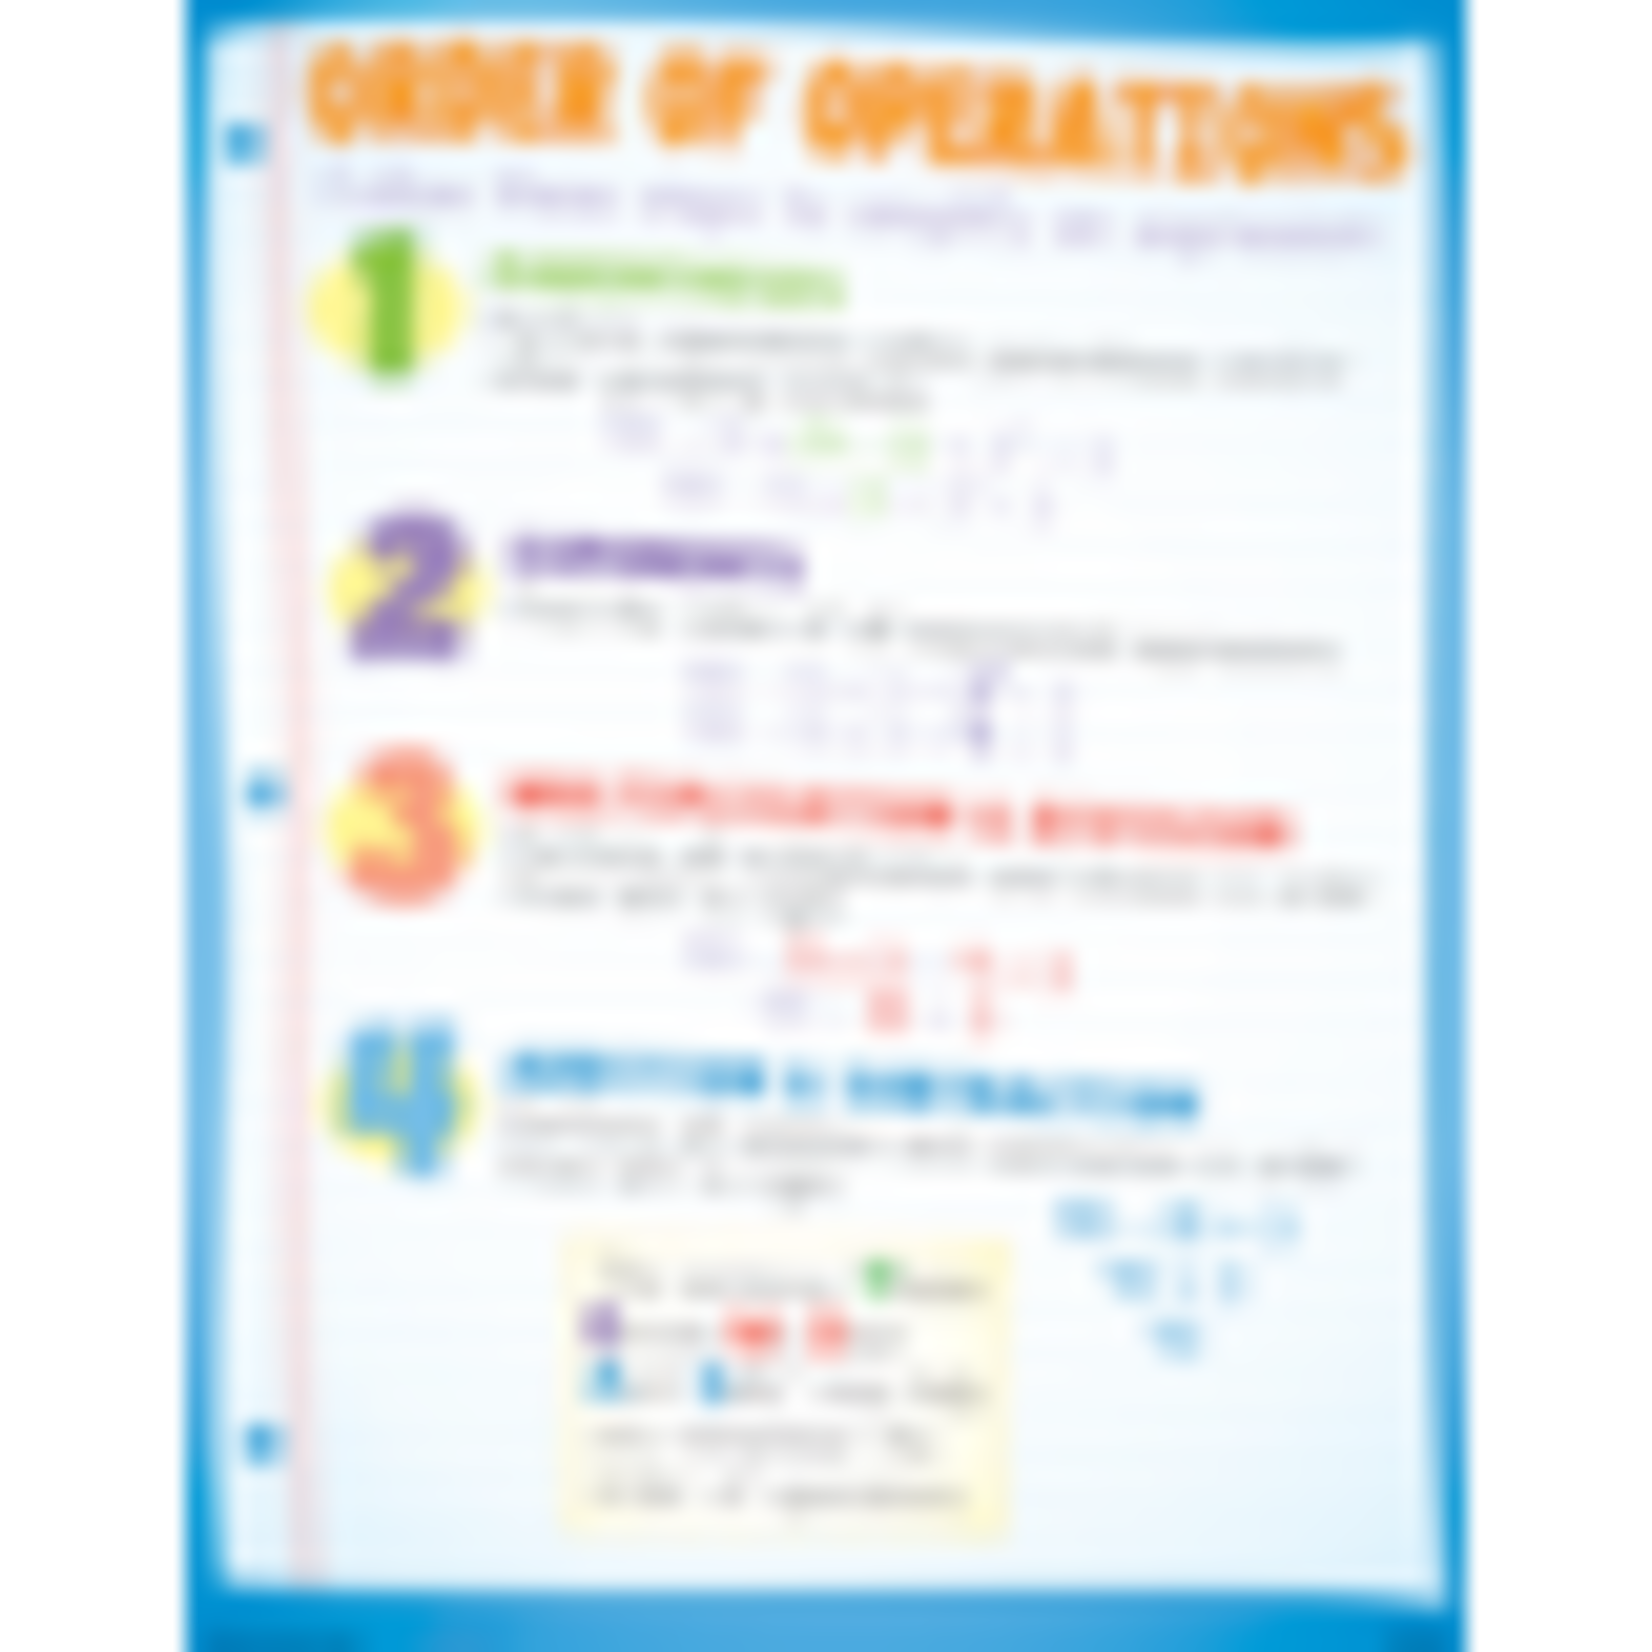 TEACHER CREATED RESOURCES Math Basics Poster Set